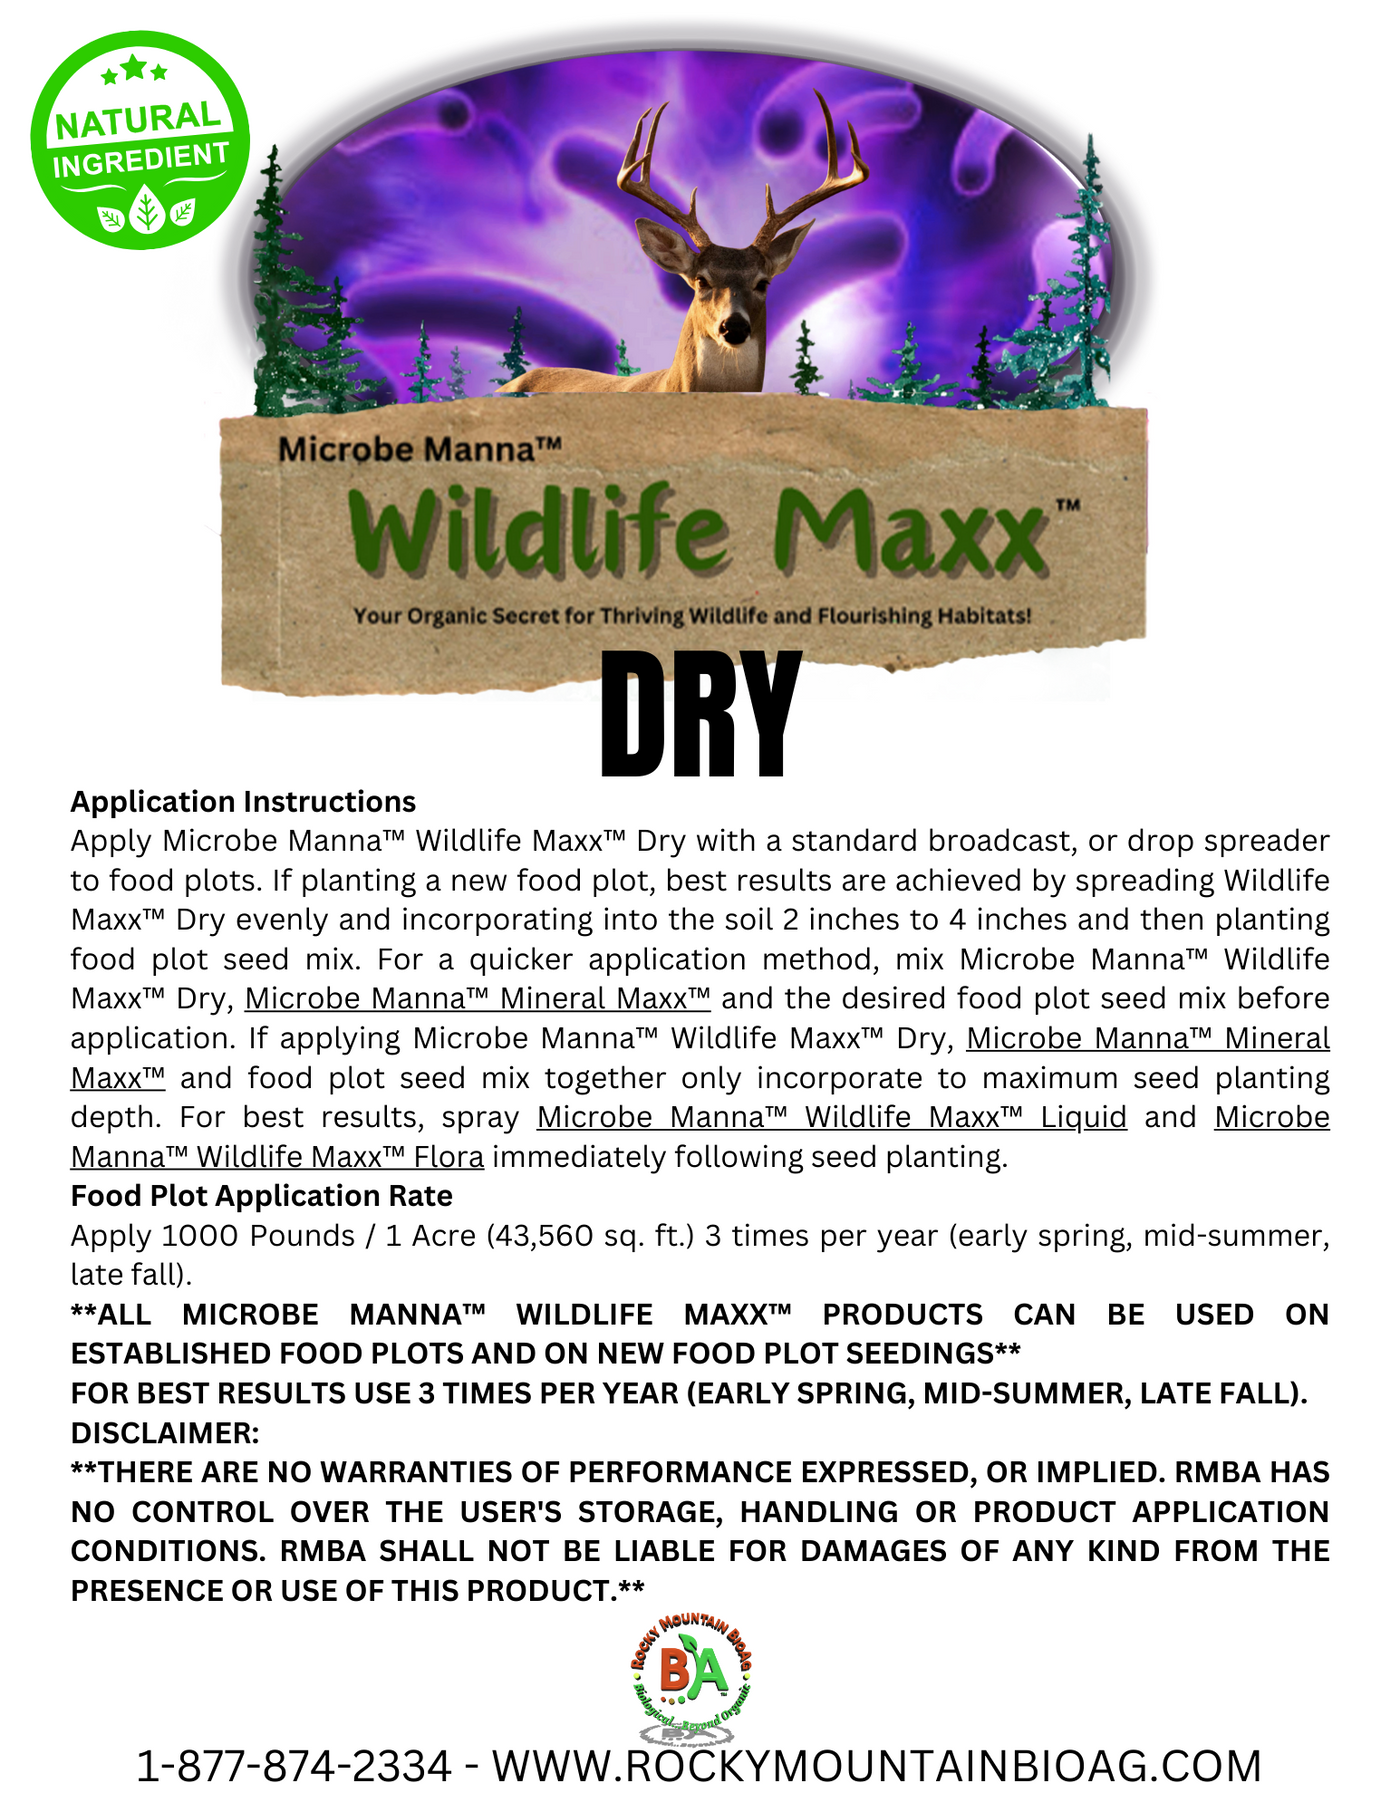 Application instructions for Microbe Manna Wildlife Maxx Dry